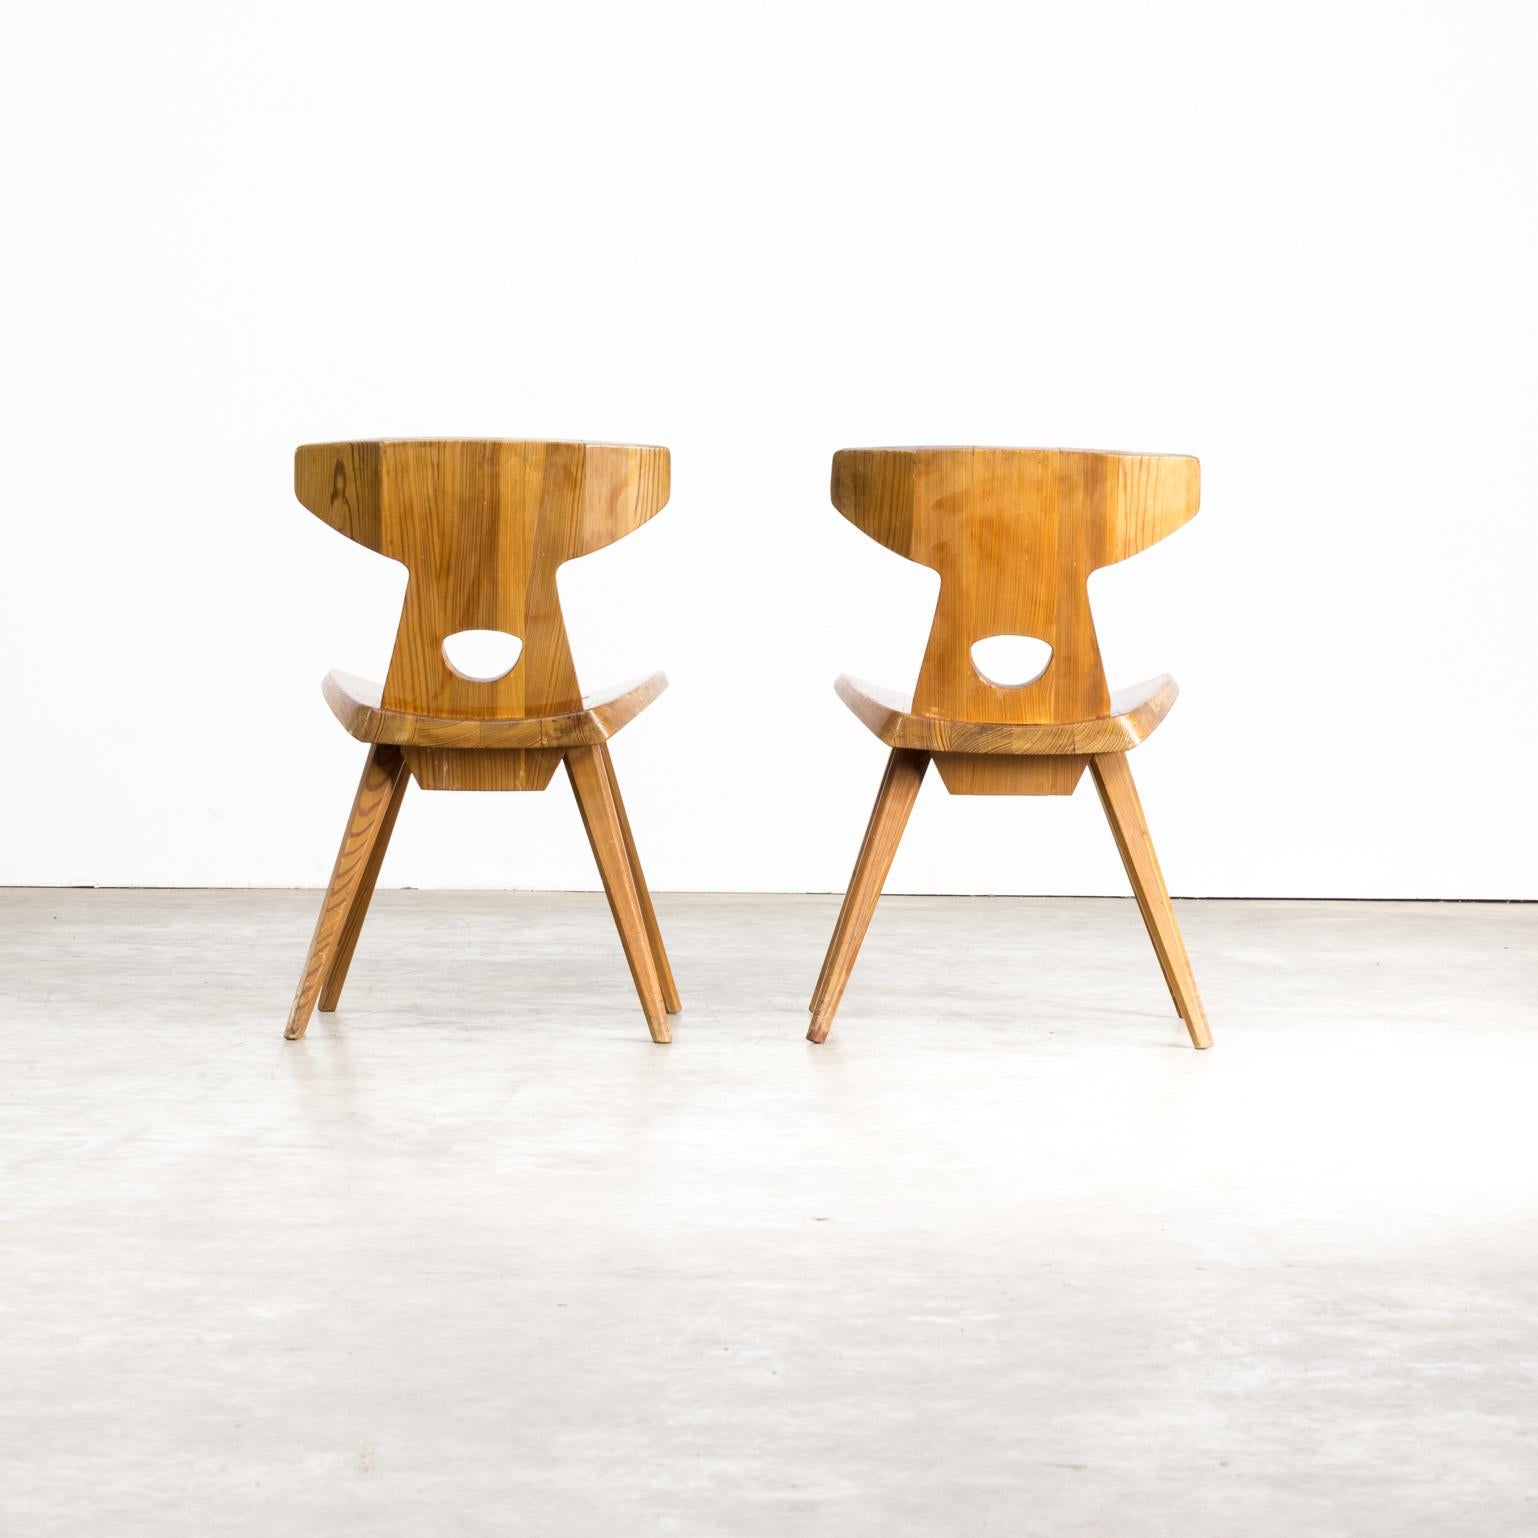 1960s Jacob Kielland-Brandt Dining Chairs for I. Christiansen Set of 2 1